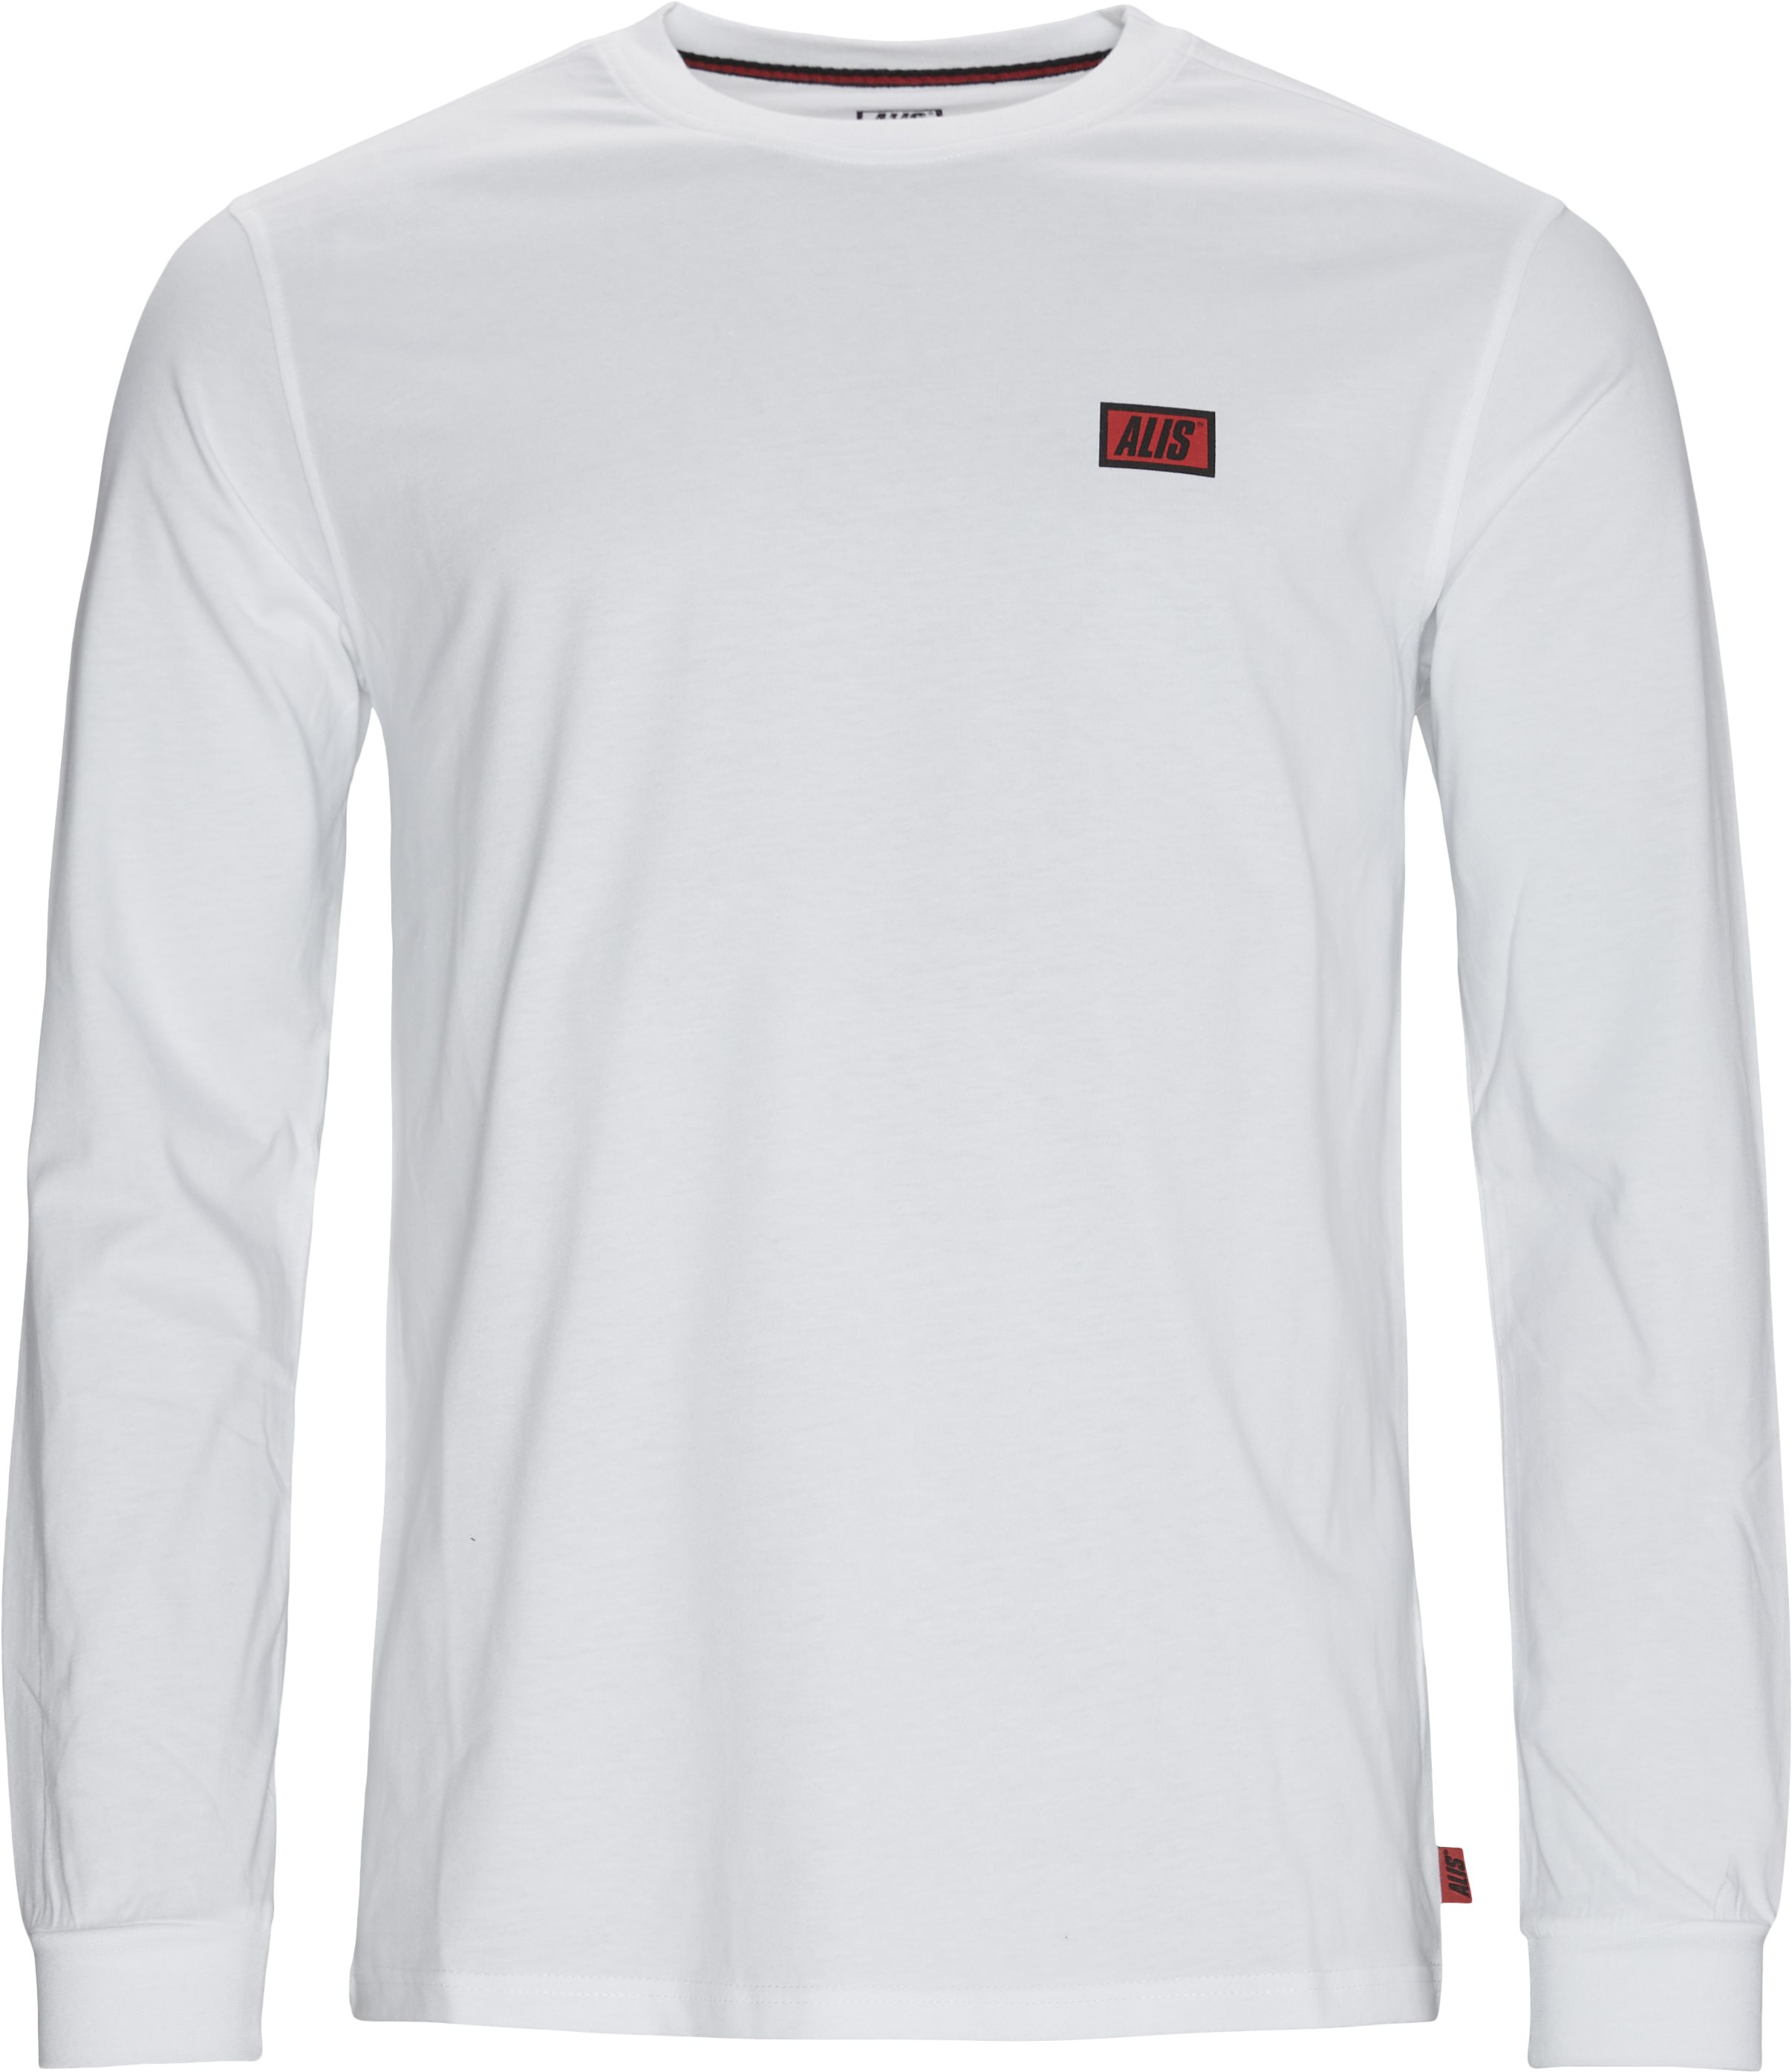 Am3011 L/Æ Tee - T-shirts - Regular fit - White